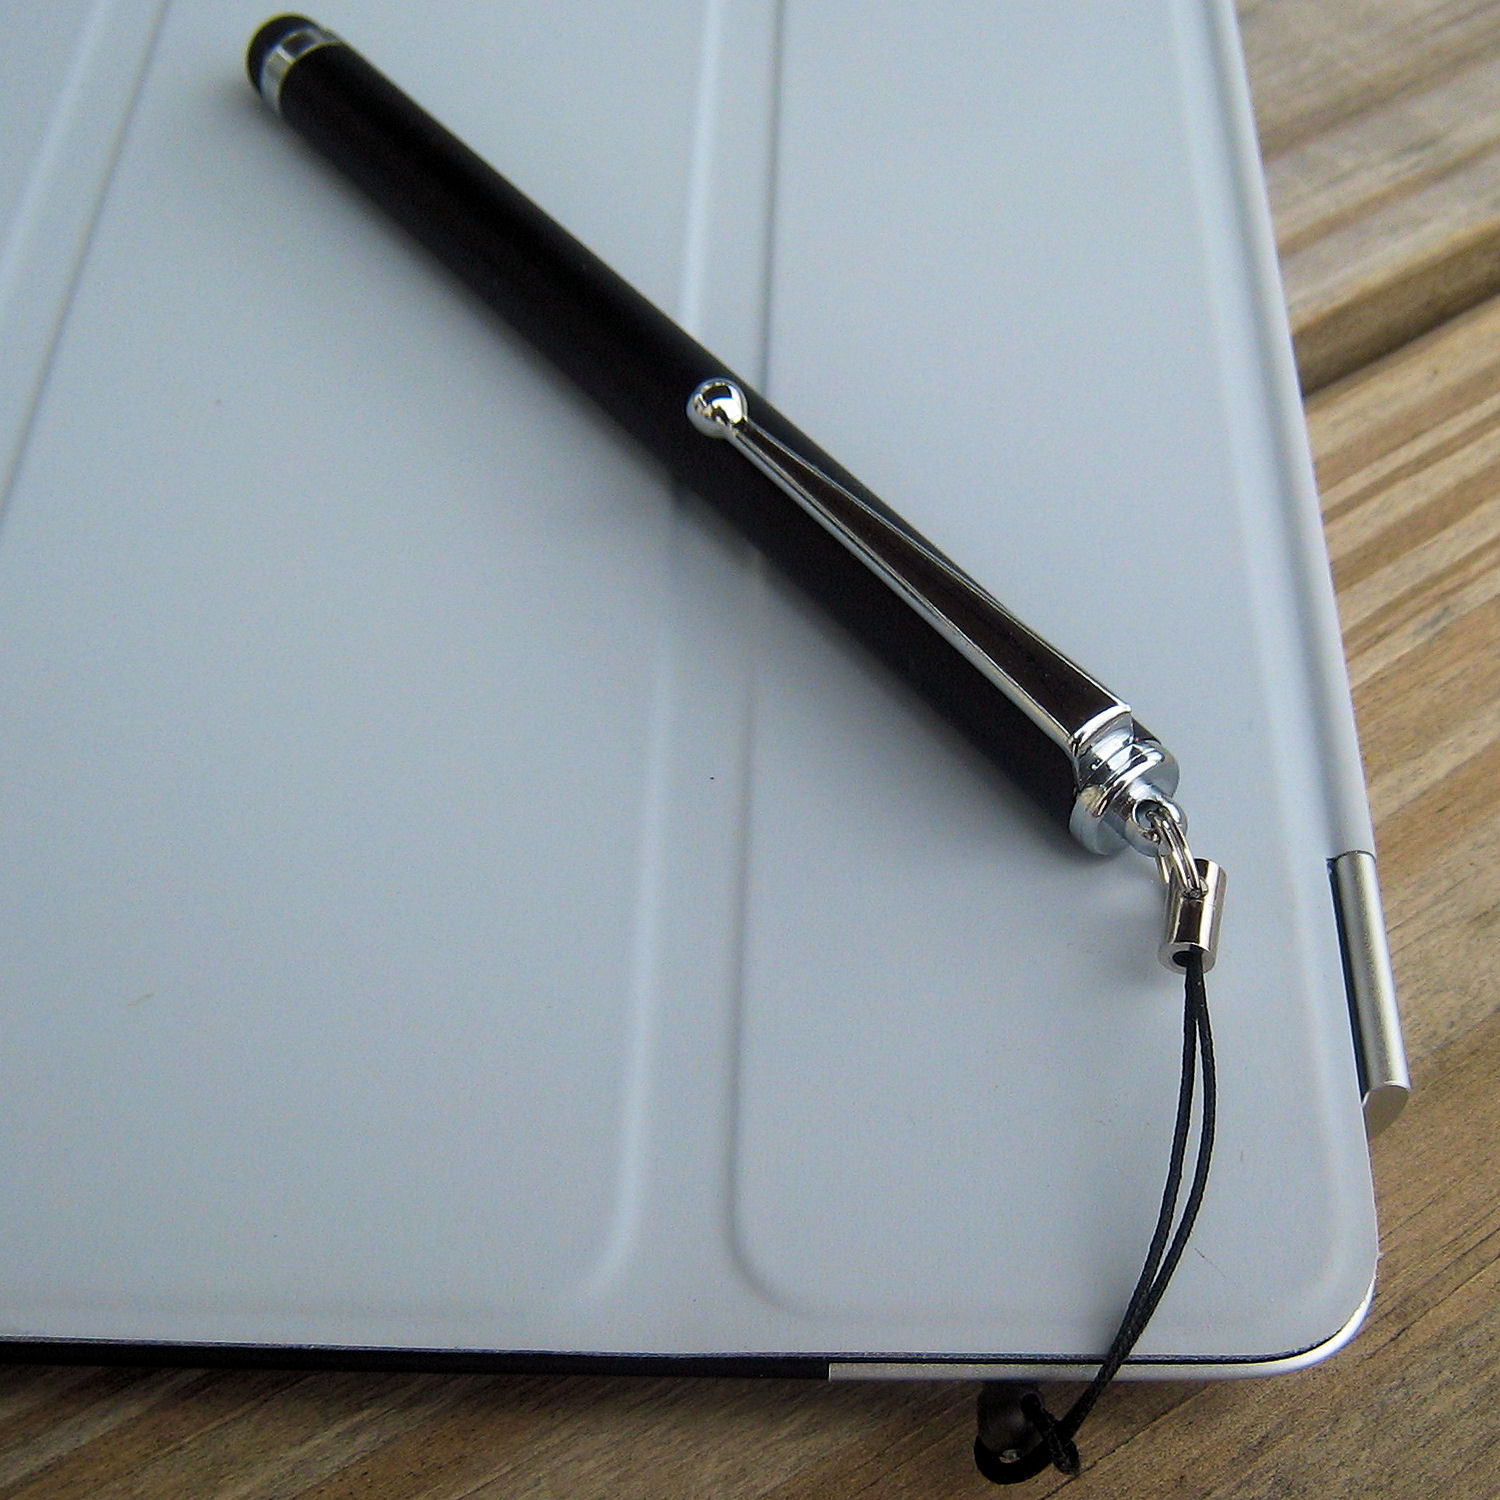 Gomadic Precision Tip Capacitive Stylus Pen designed for the Samsung Omnia 7 (Black Color) - Lifetime Warranty